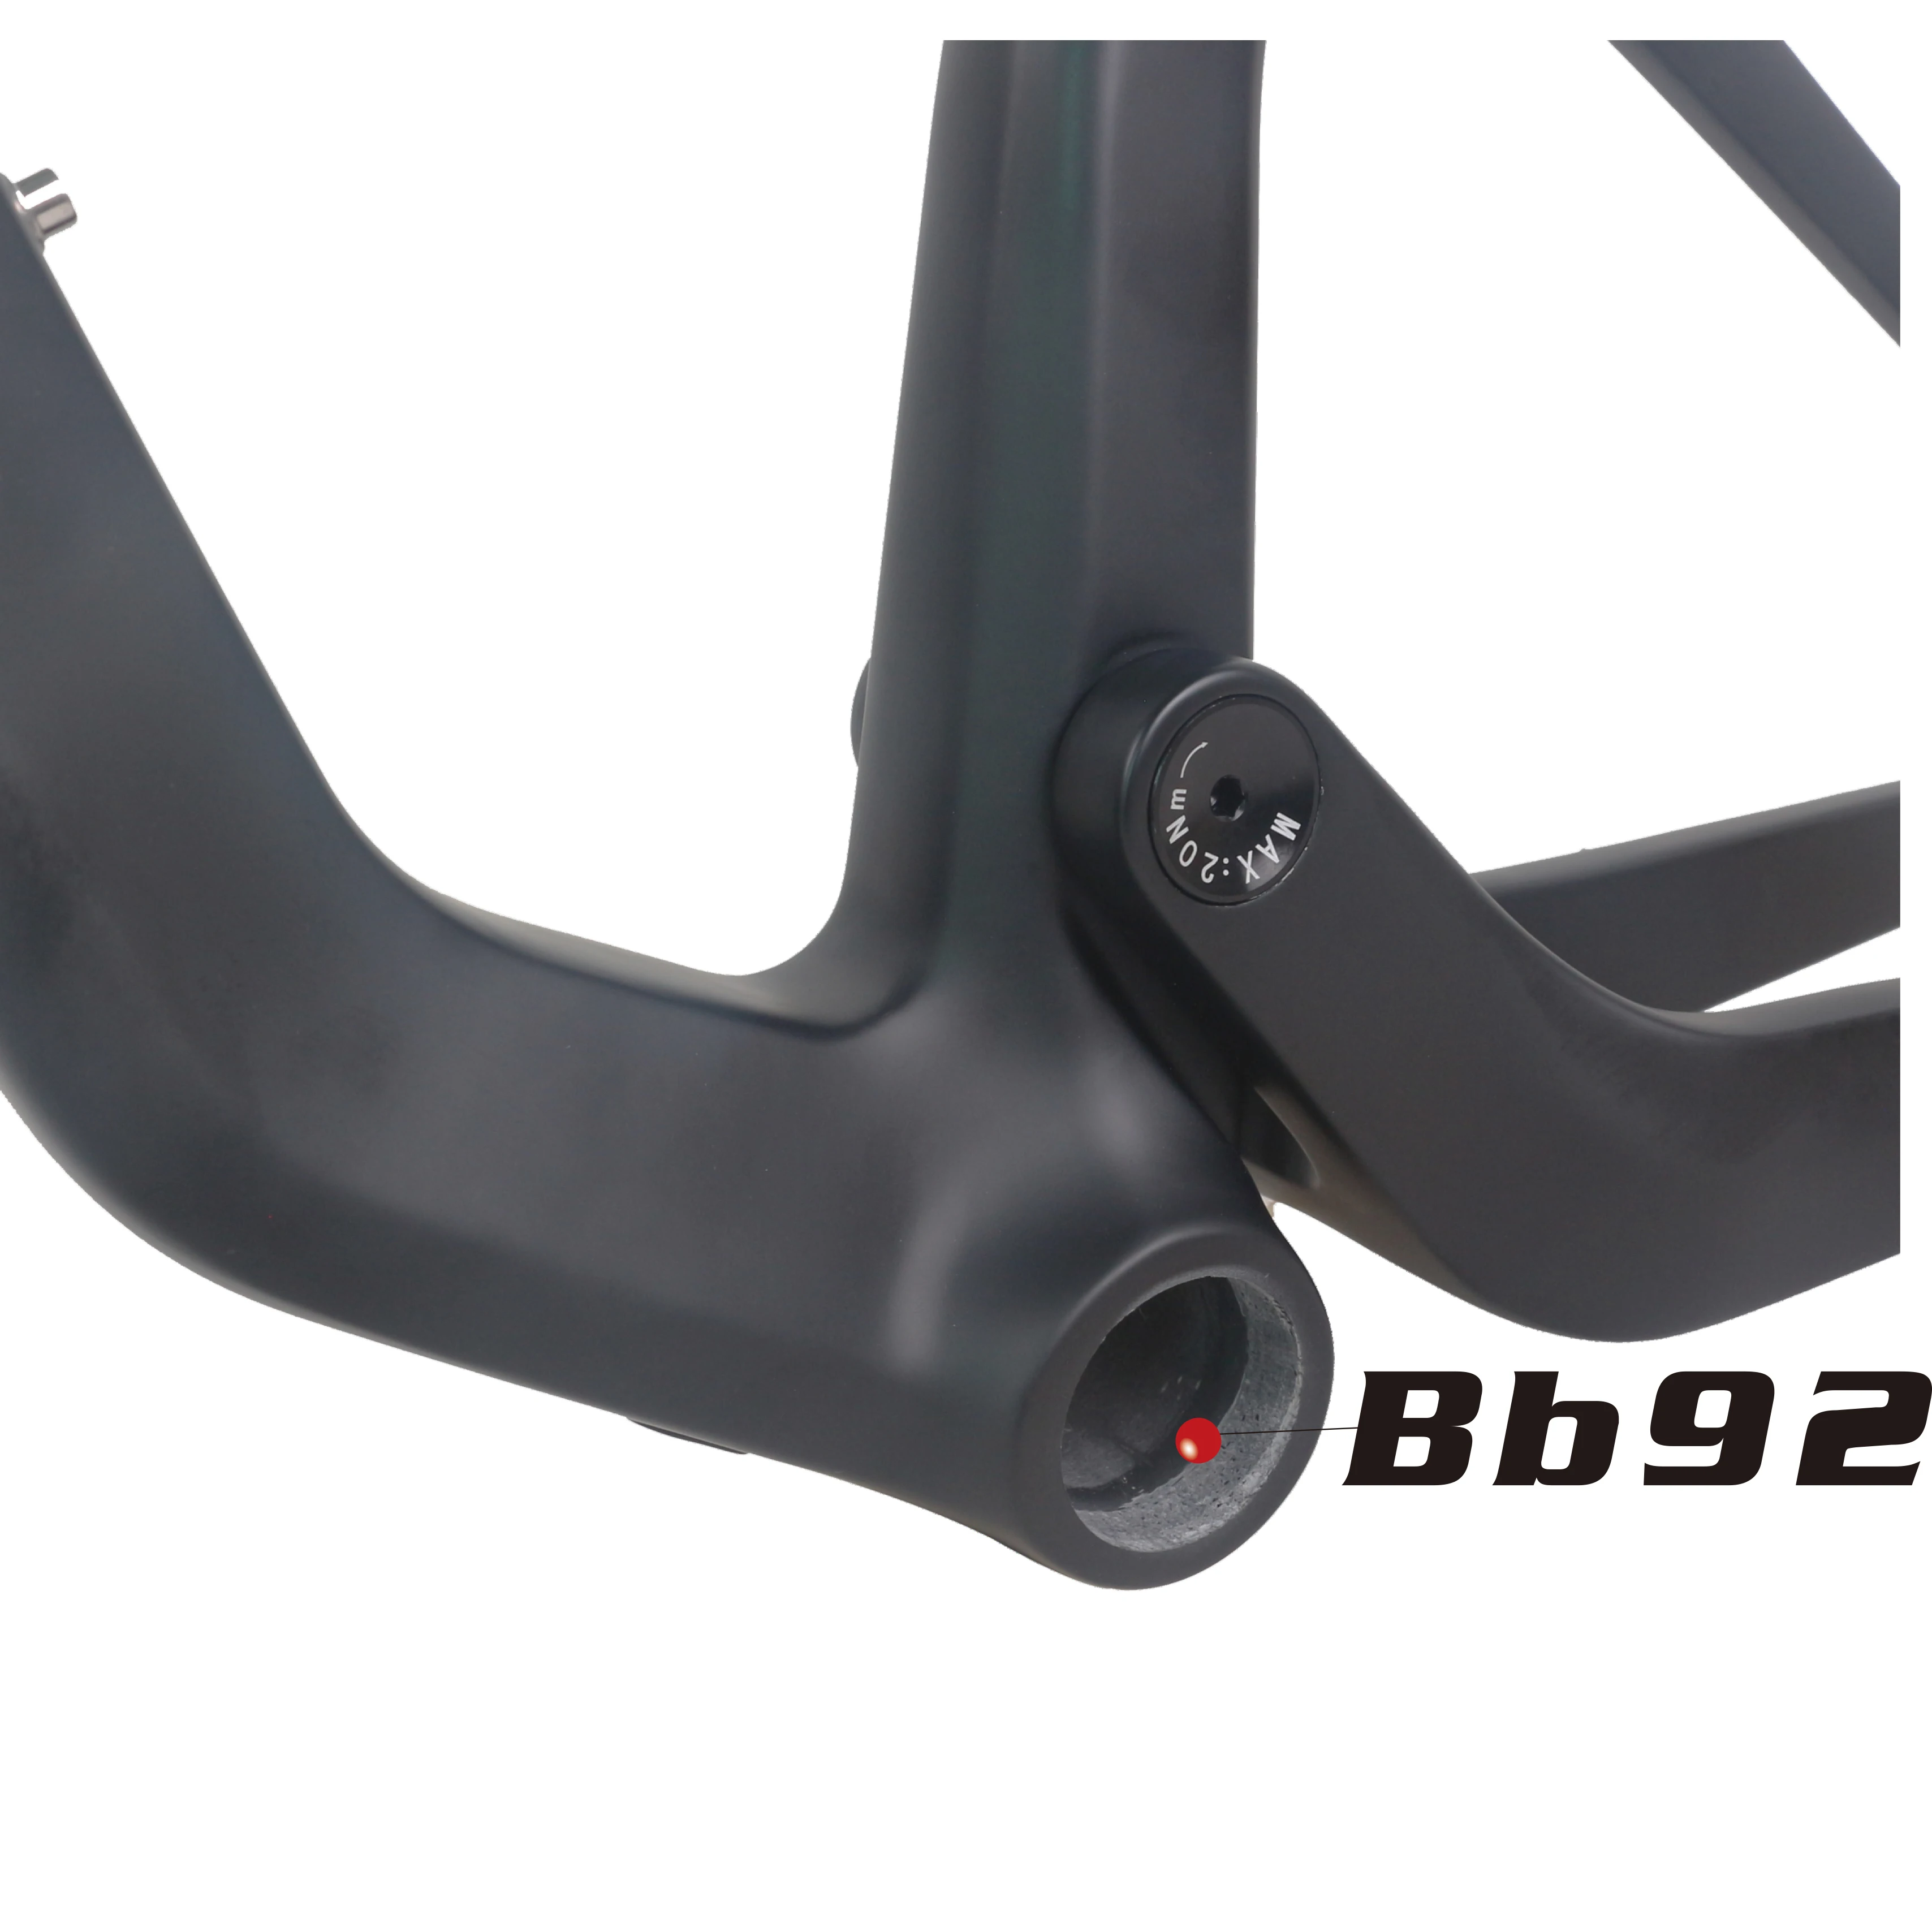 NEW 29er frame Full Suspension MTB Bicycle Carbon frame suspension boosts 148*12mm XC travel rear/front 120mm bike FM198